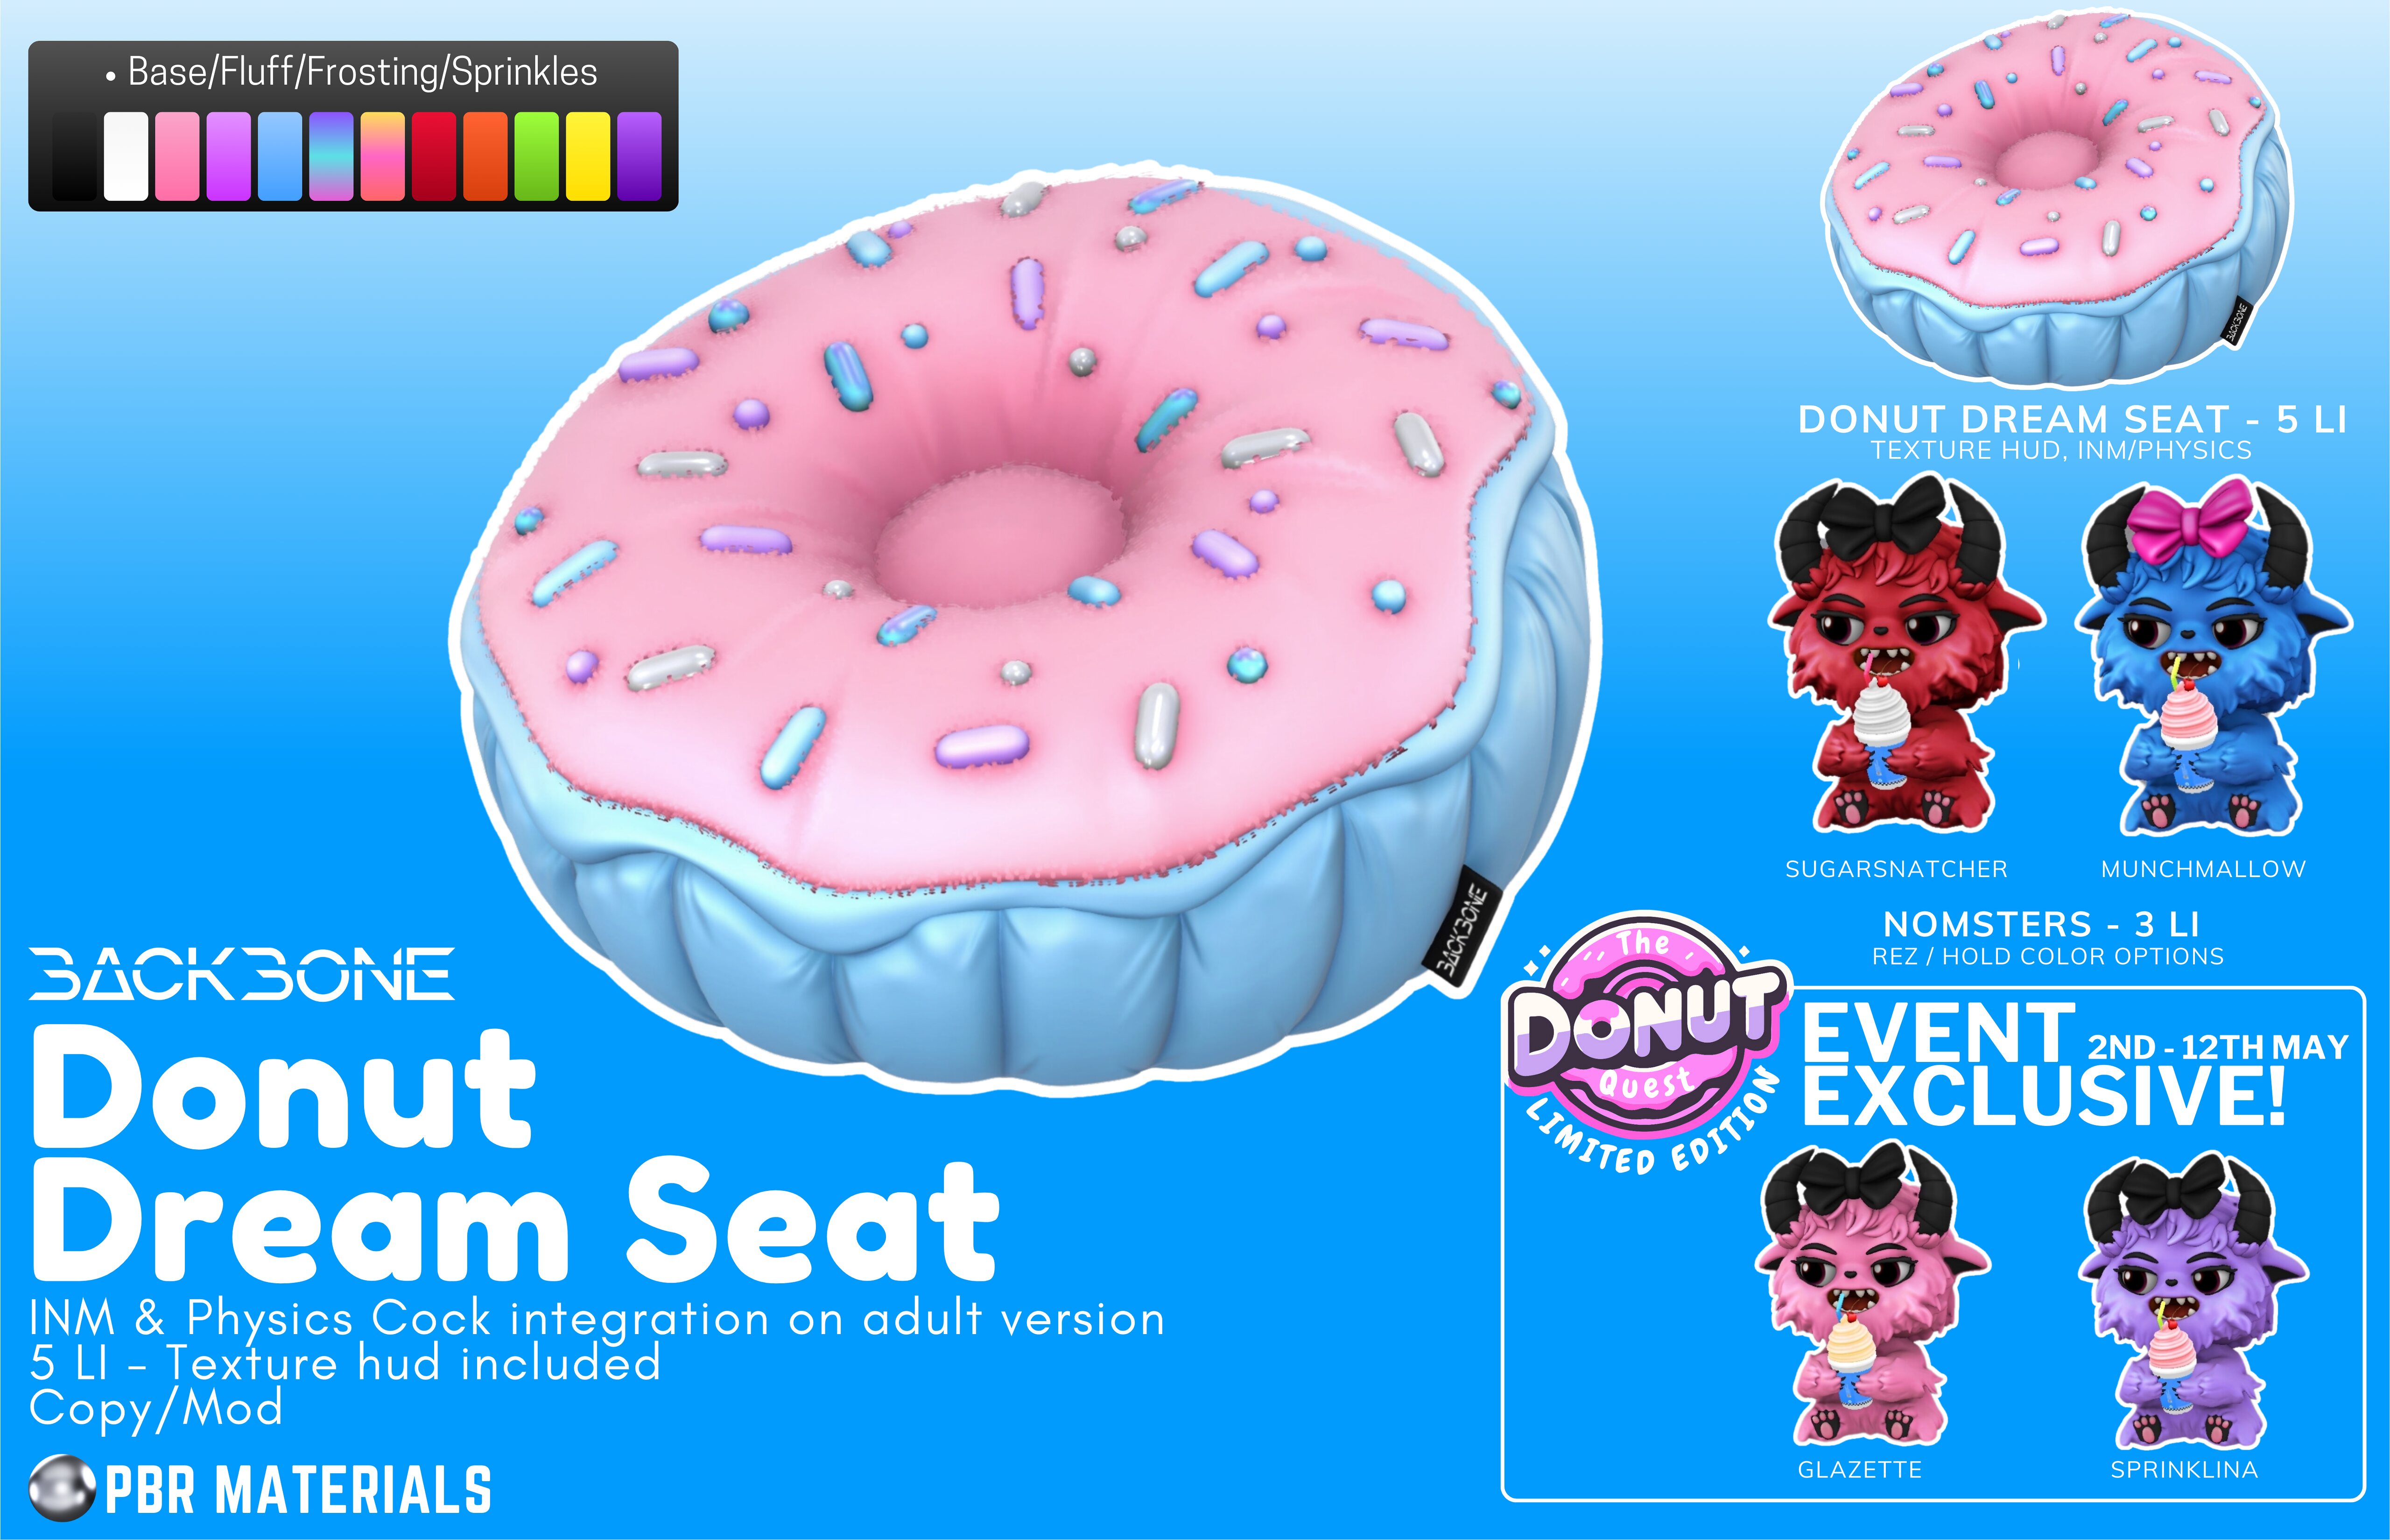 BackBone – Donut Dream Seat